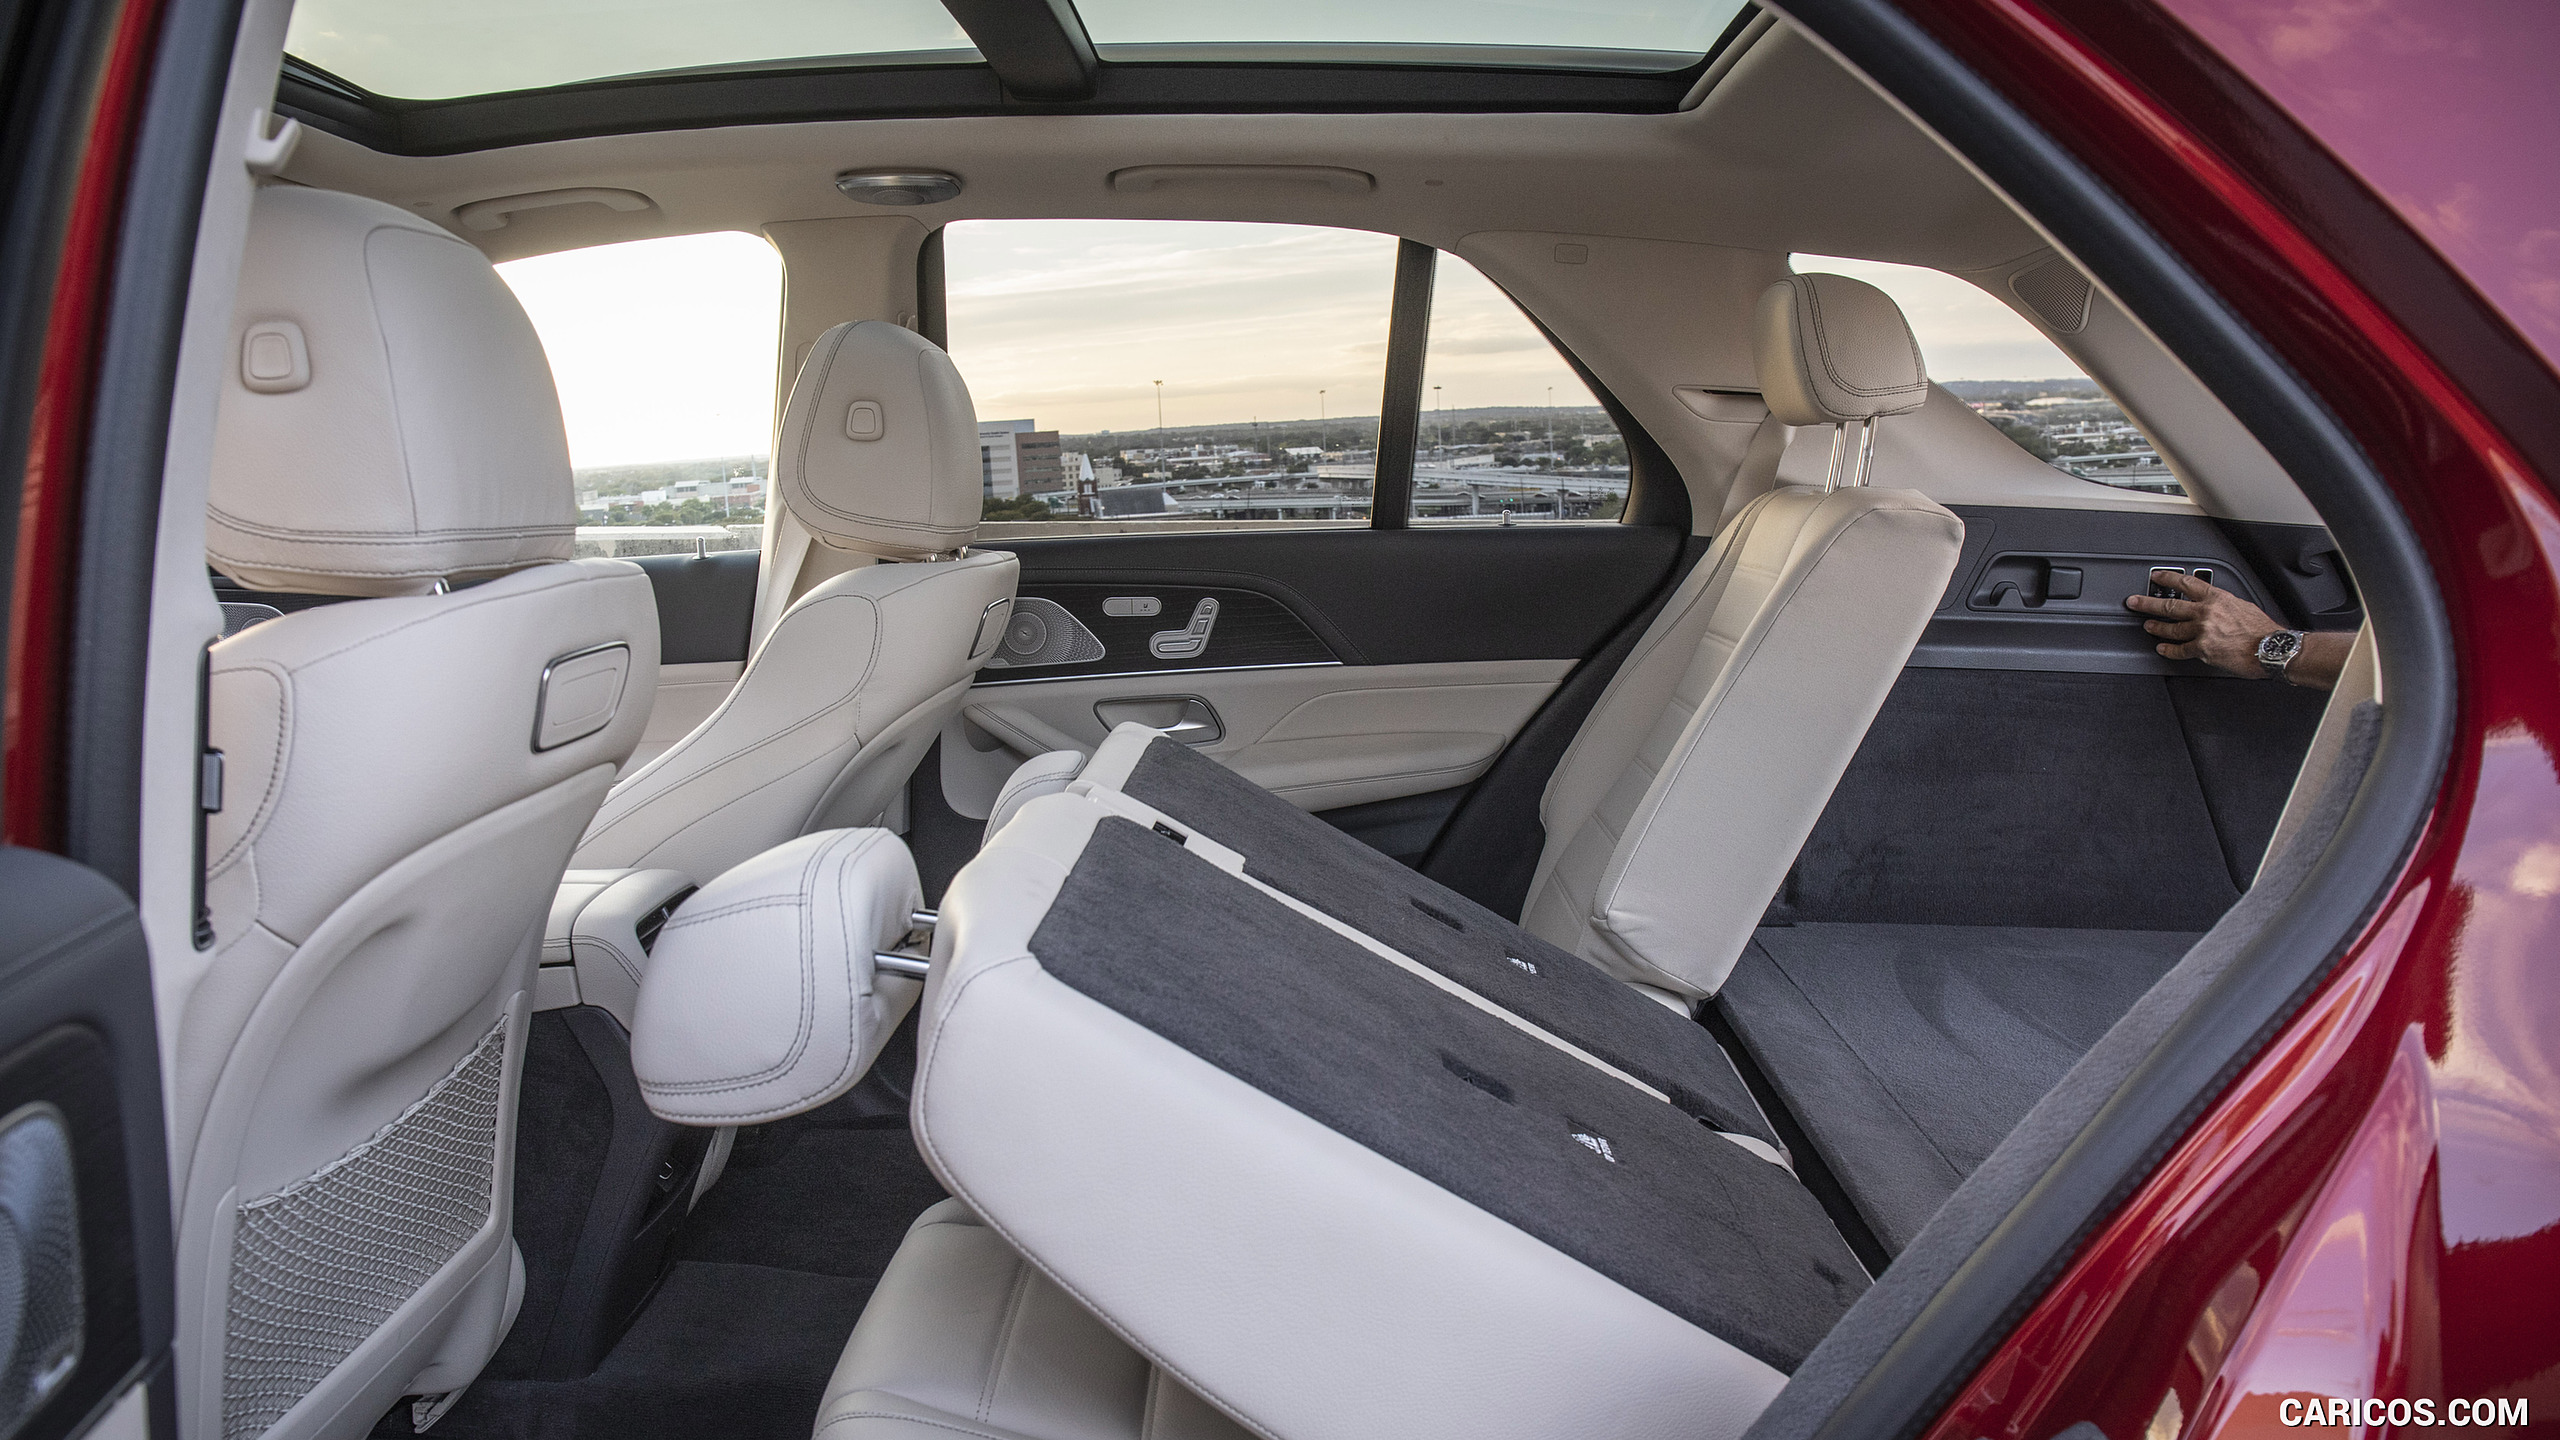 2020 Mercedes-Benz GLE 450 4MATIC (Color: Designo Hyazinth Red Metallic; US-Spec) - Interior, Rear Seats, #335 of 358